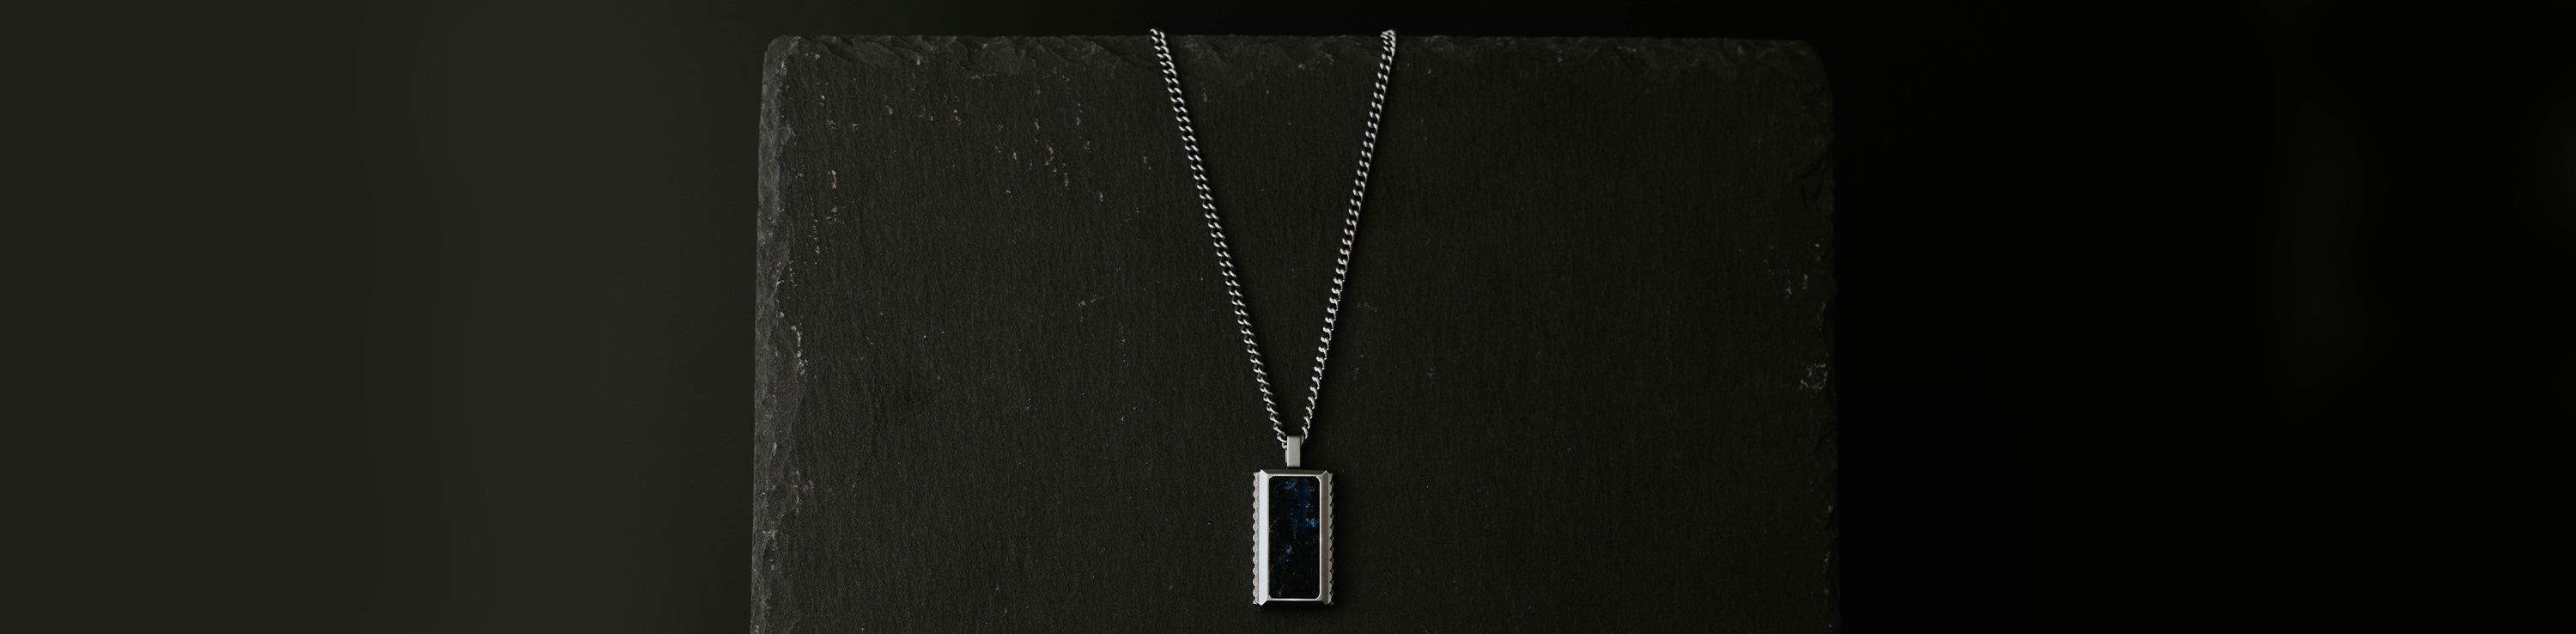 Hatton - necklace pendant silver blue gemstone stainless steel steel and barnett